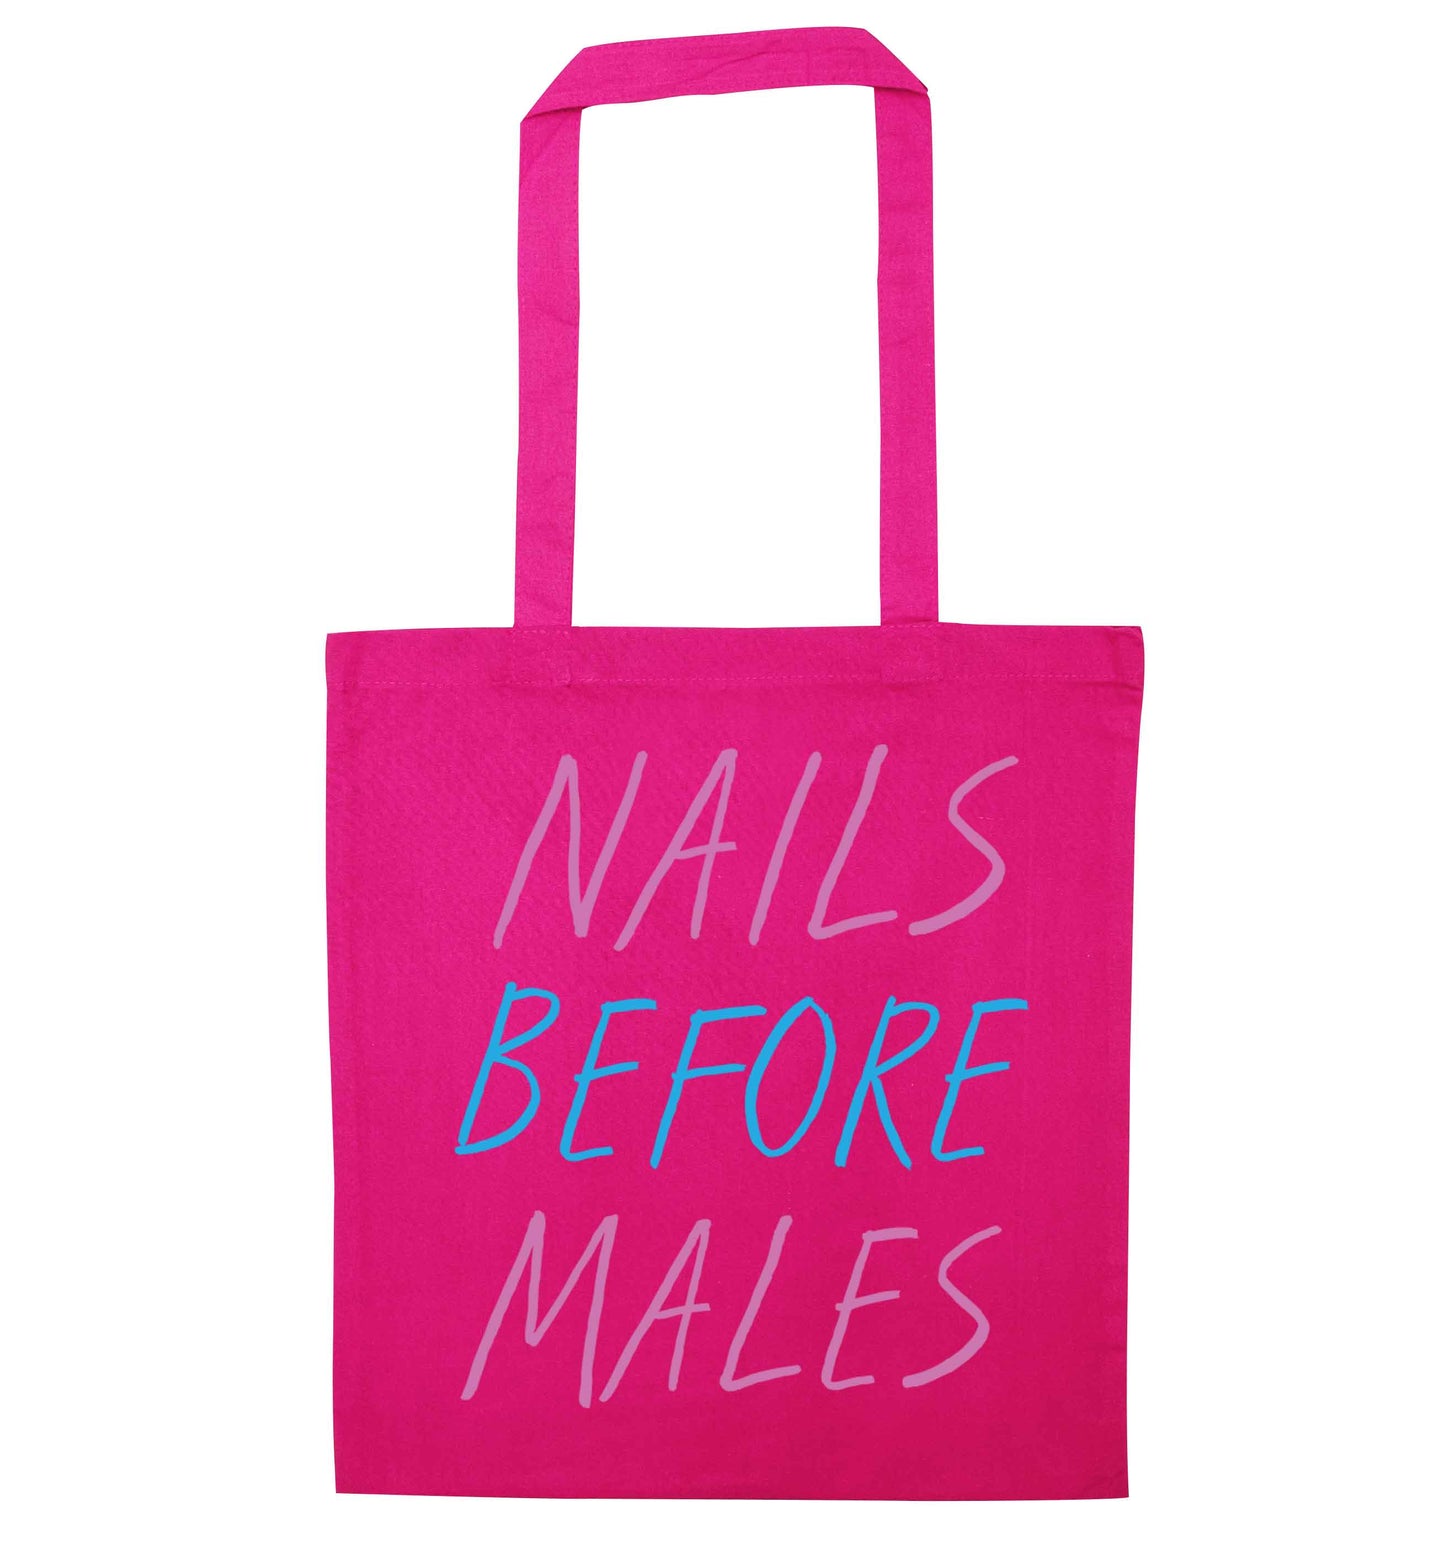 Nails before males pink tote bag